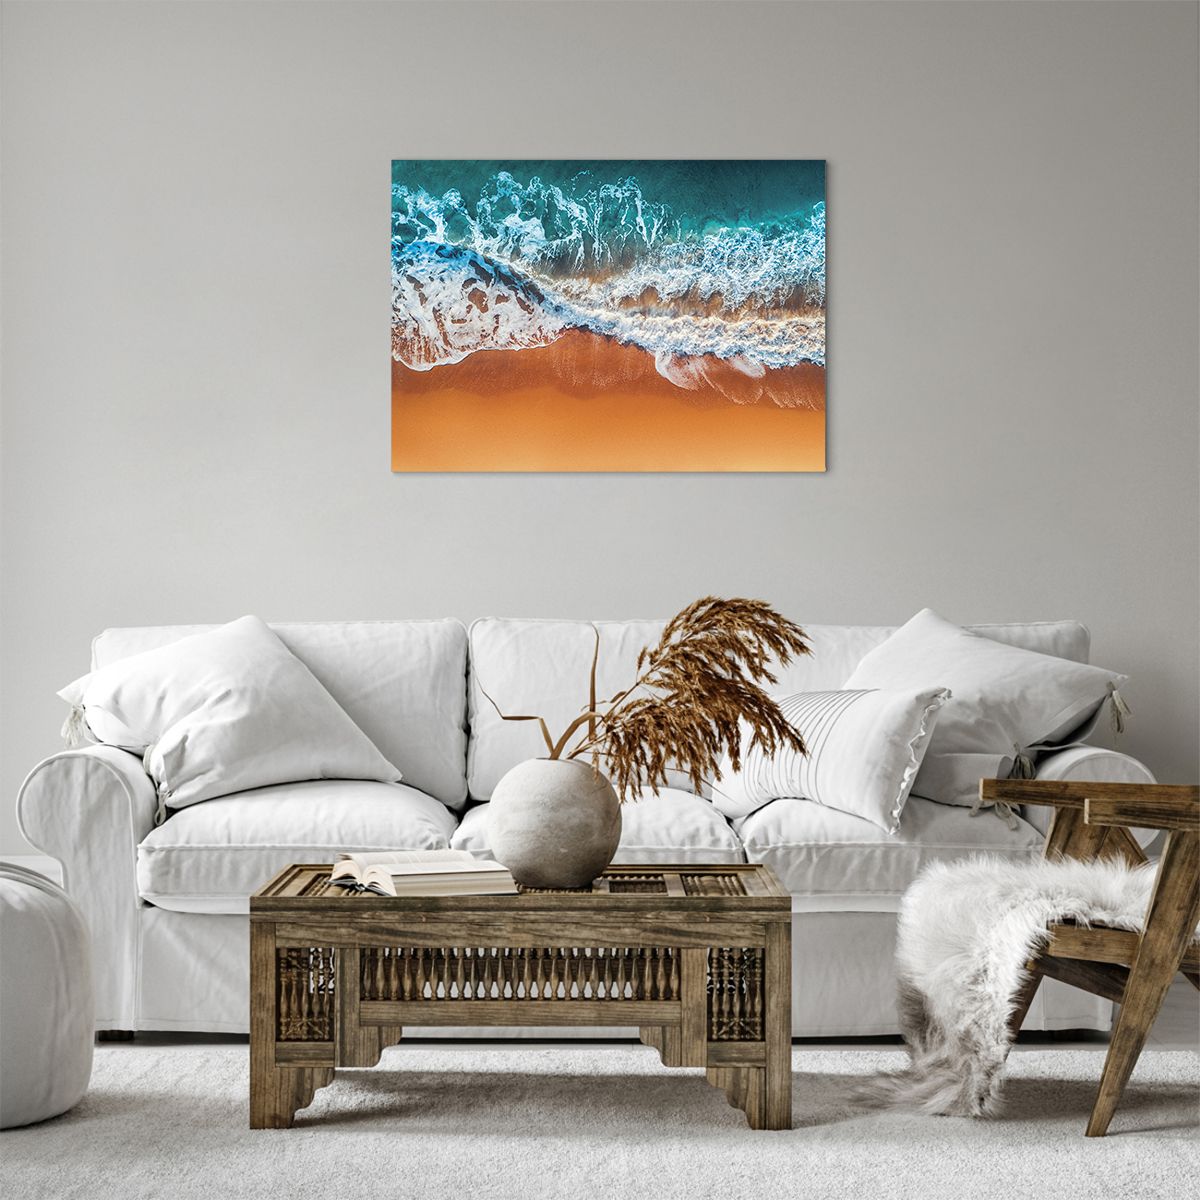 Quadro su tela Paesaggio, Quadro su tela Mare, Quadro su tela Spiaggia, Quadro su tela Oceano, Quadro su tela Natura